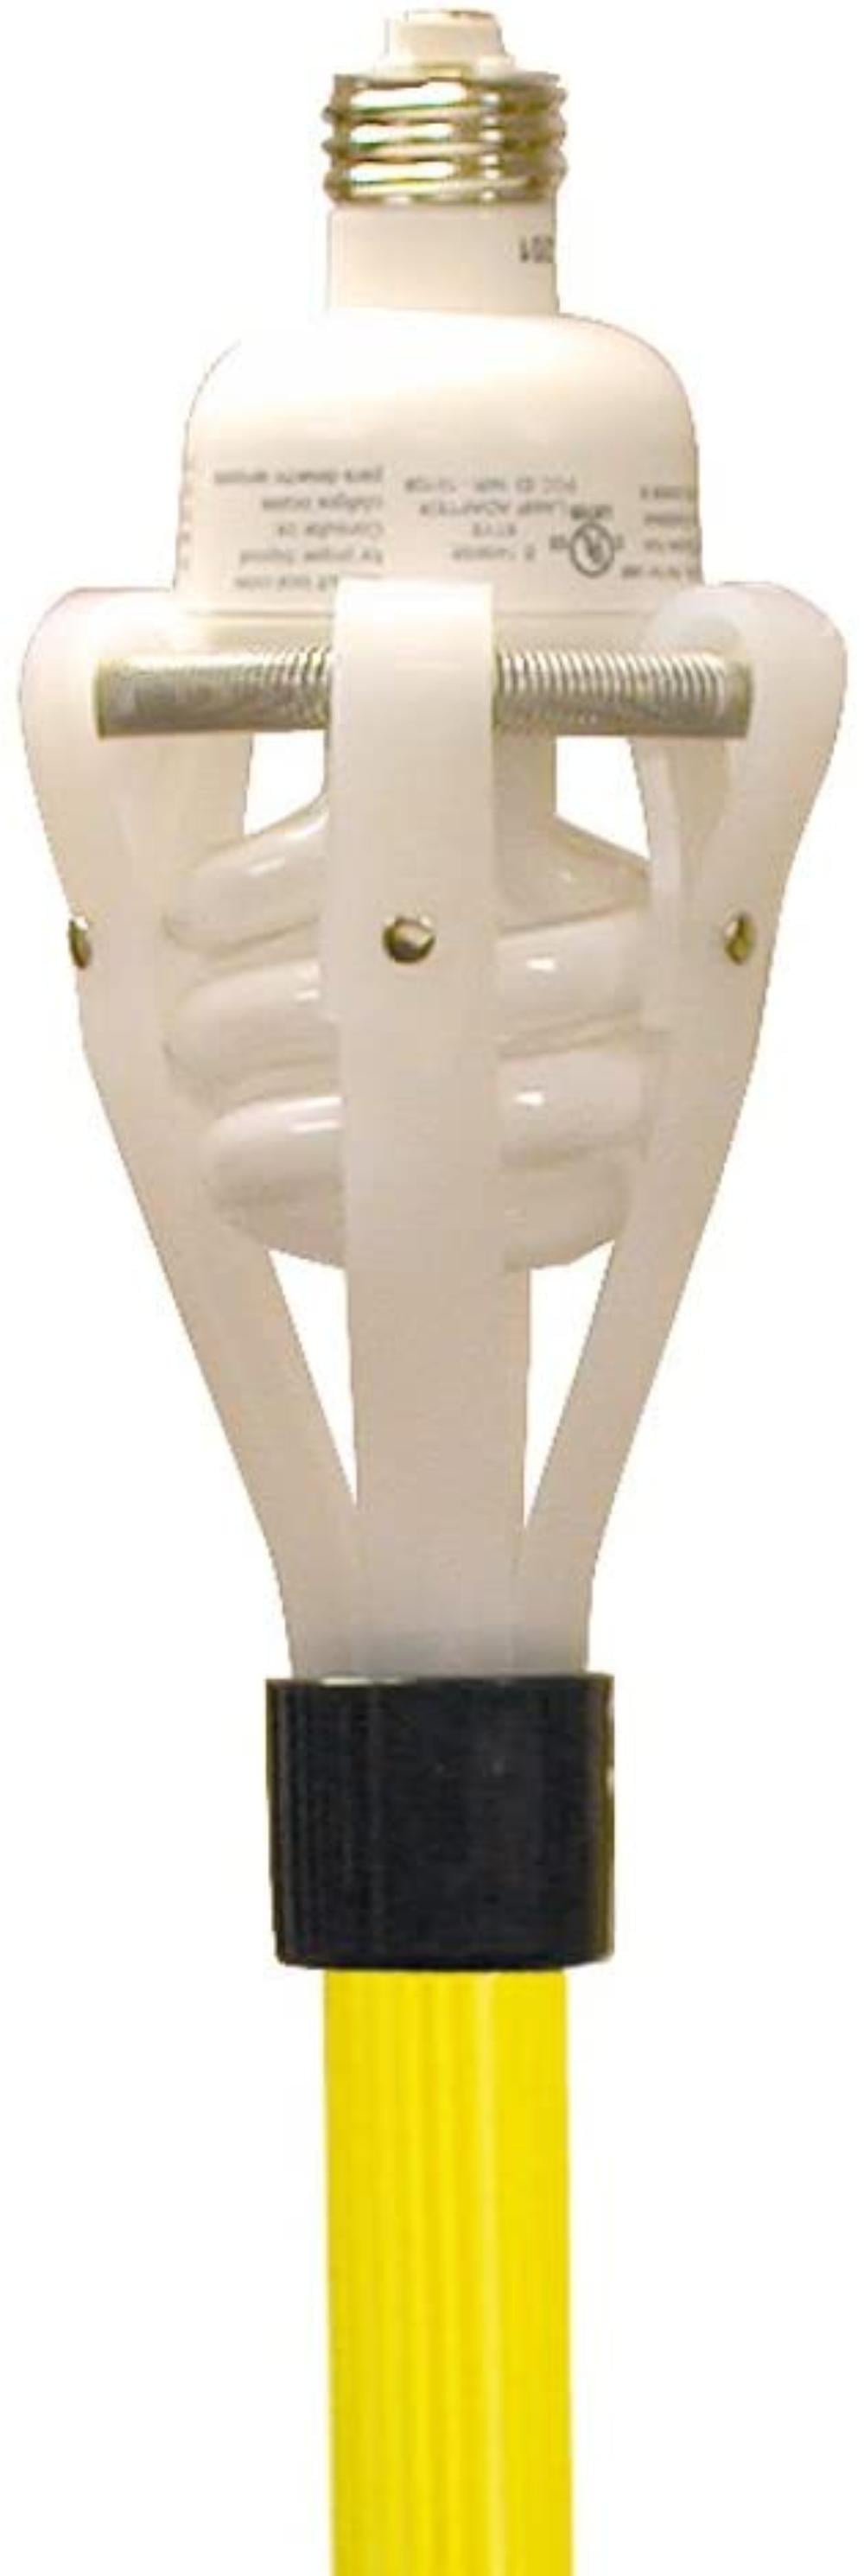 Mr Longarm 4003 Gripper Style Bulb Changer for sale online 